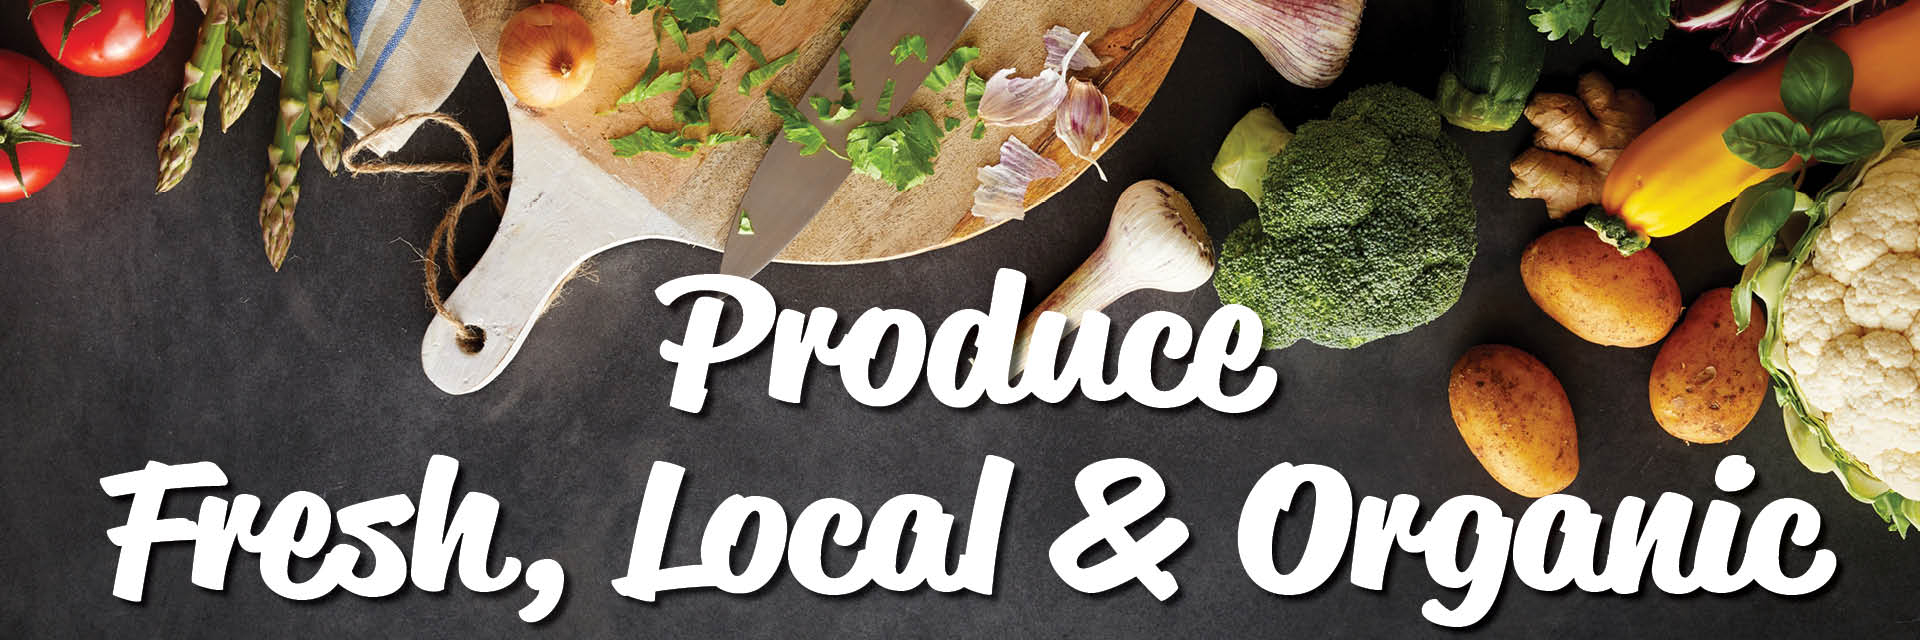 Fresh Local and Organic Produce